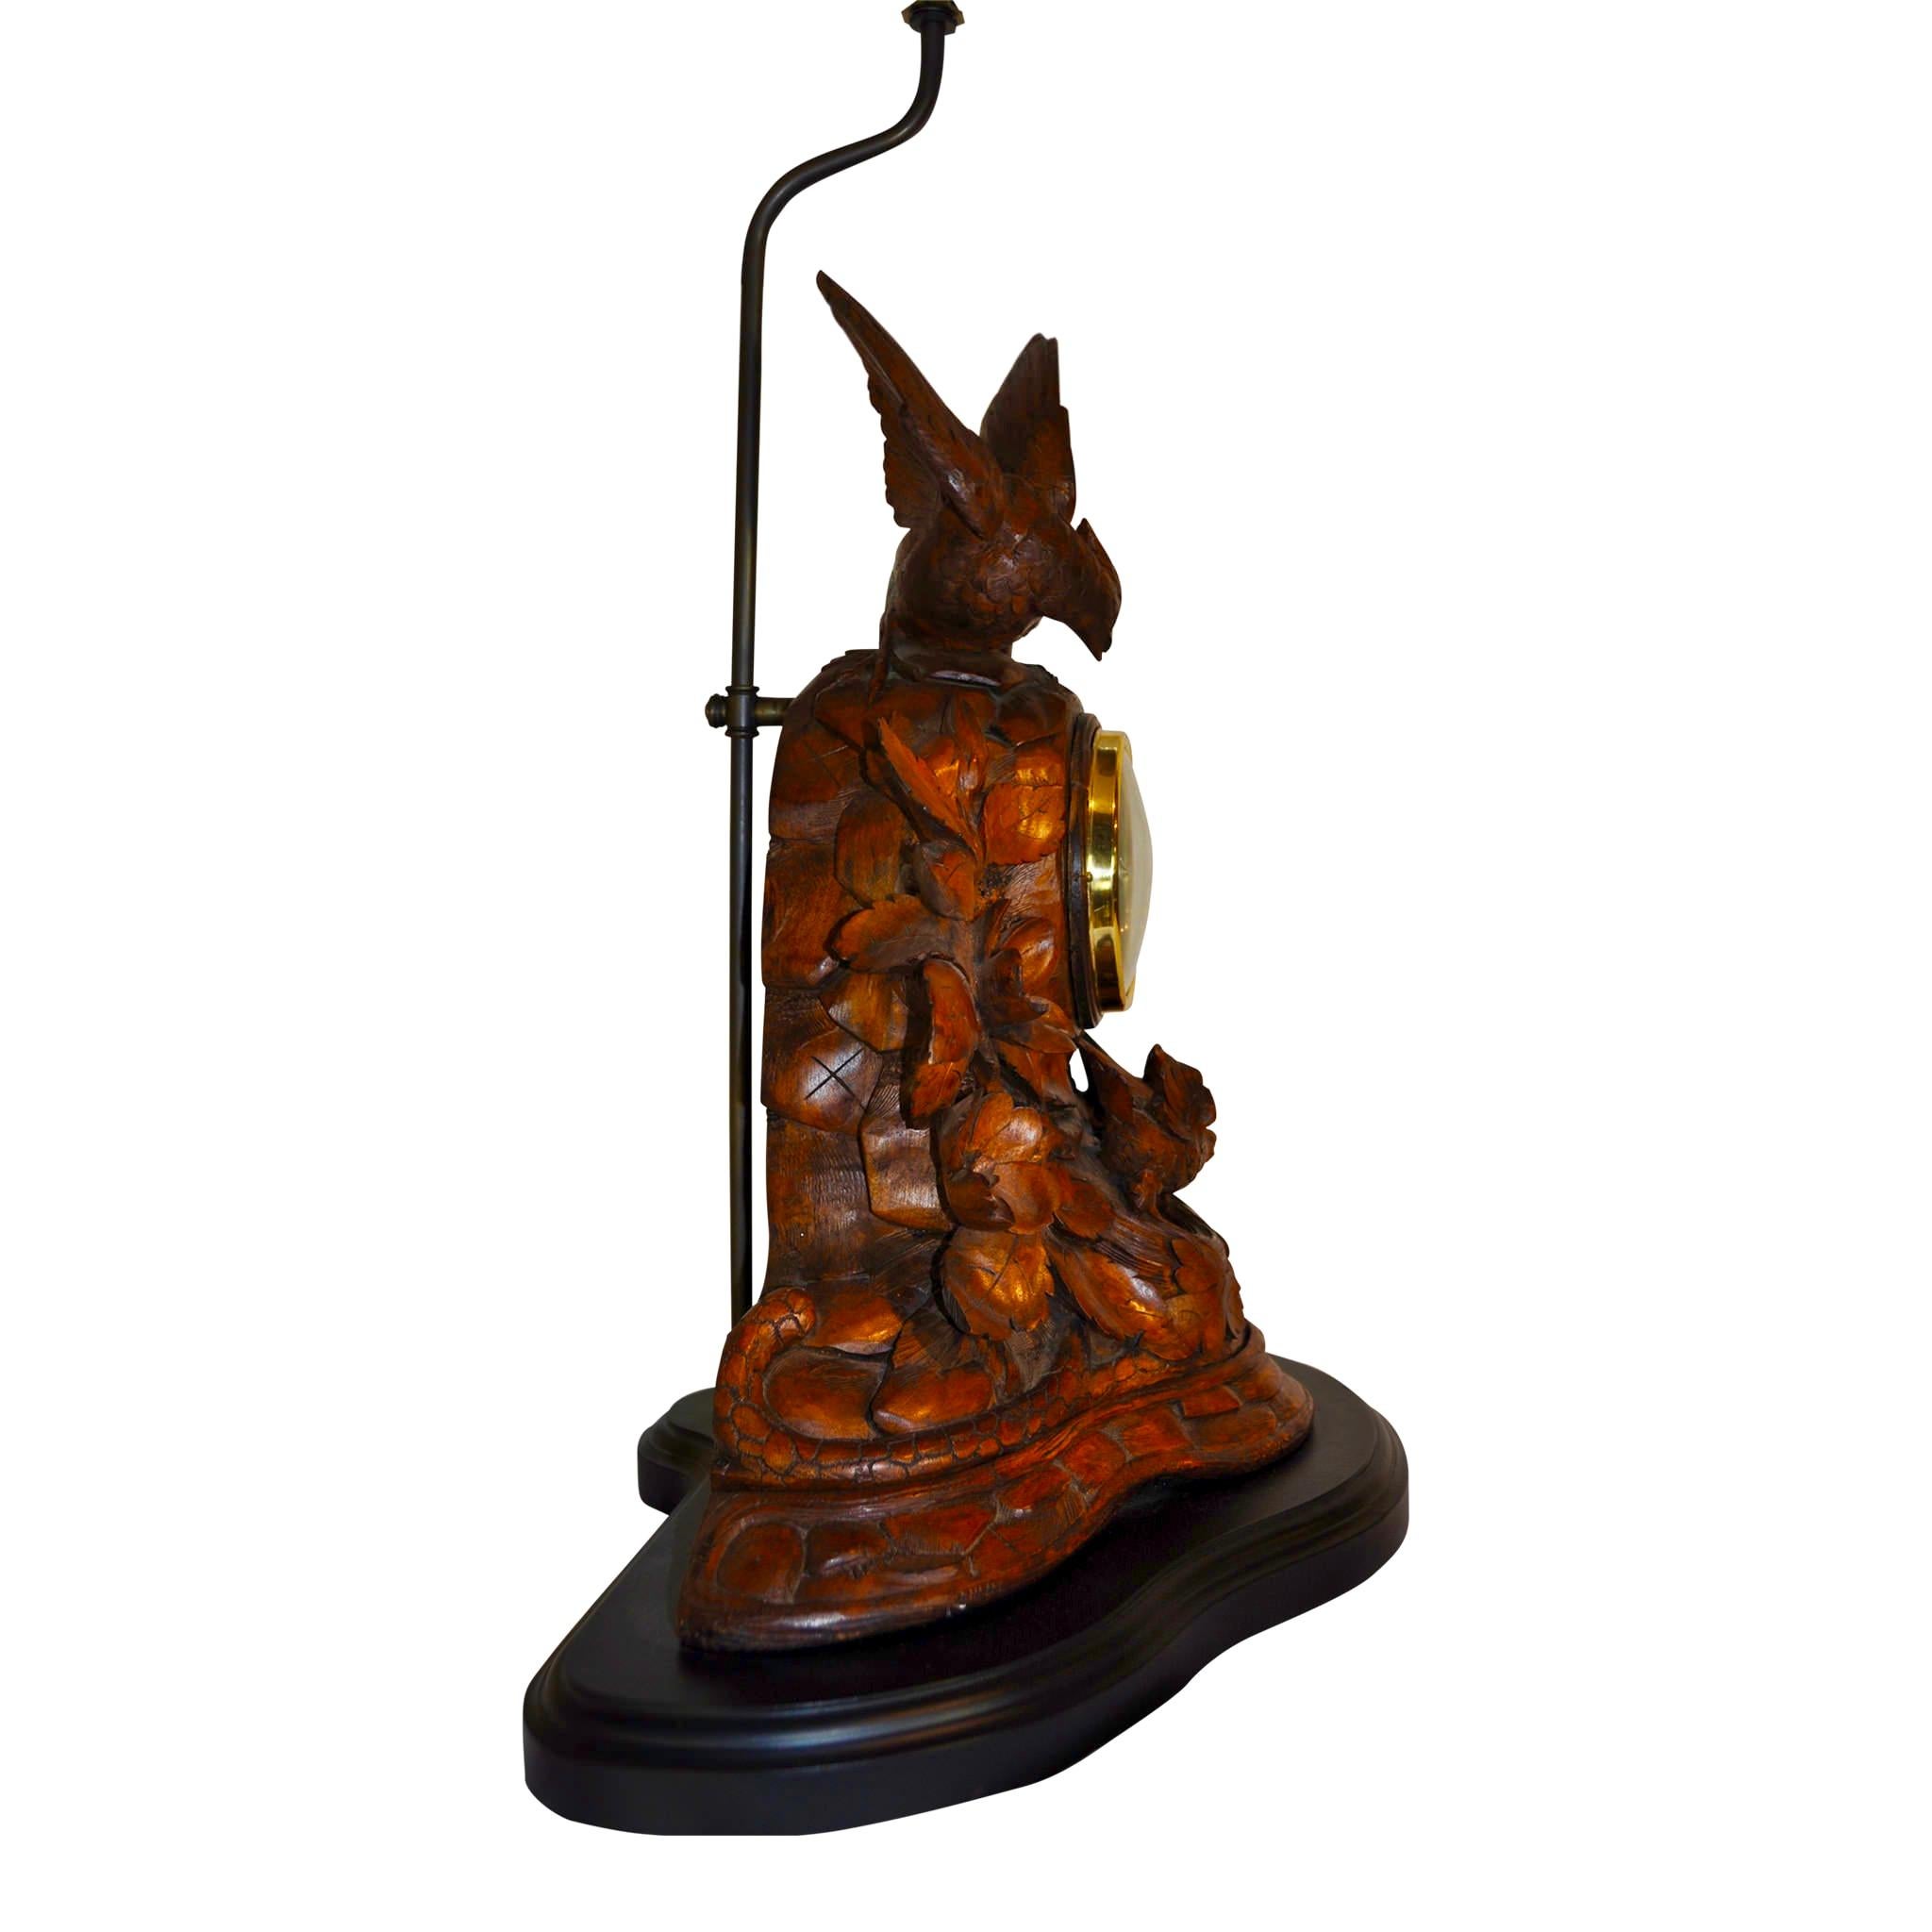 European Mantle Clock Lamp, circa 1900